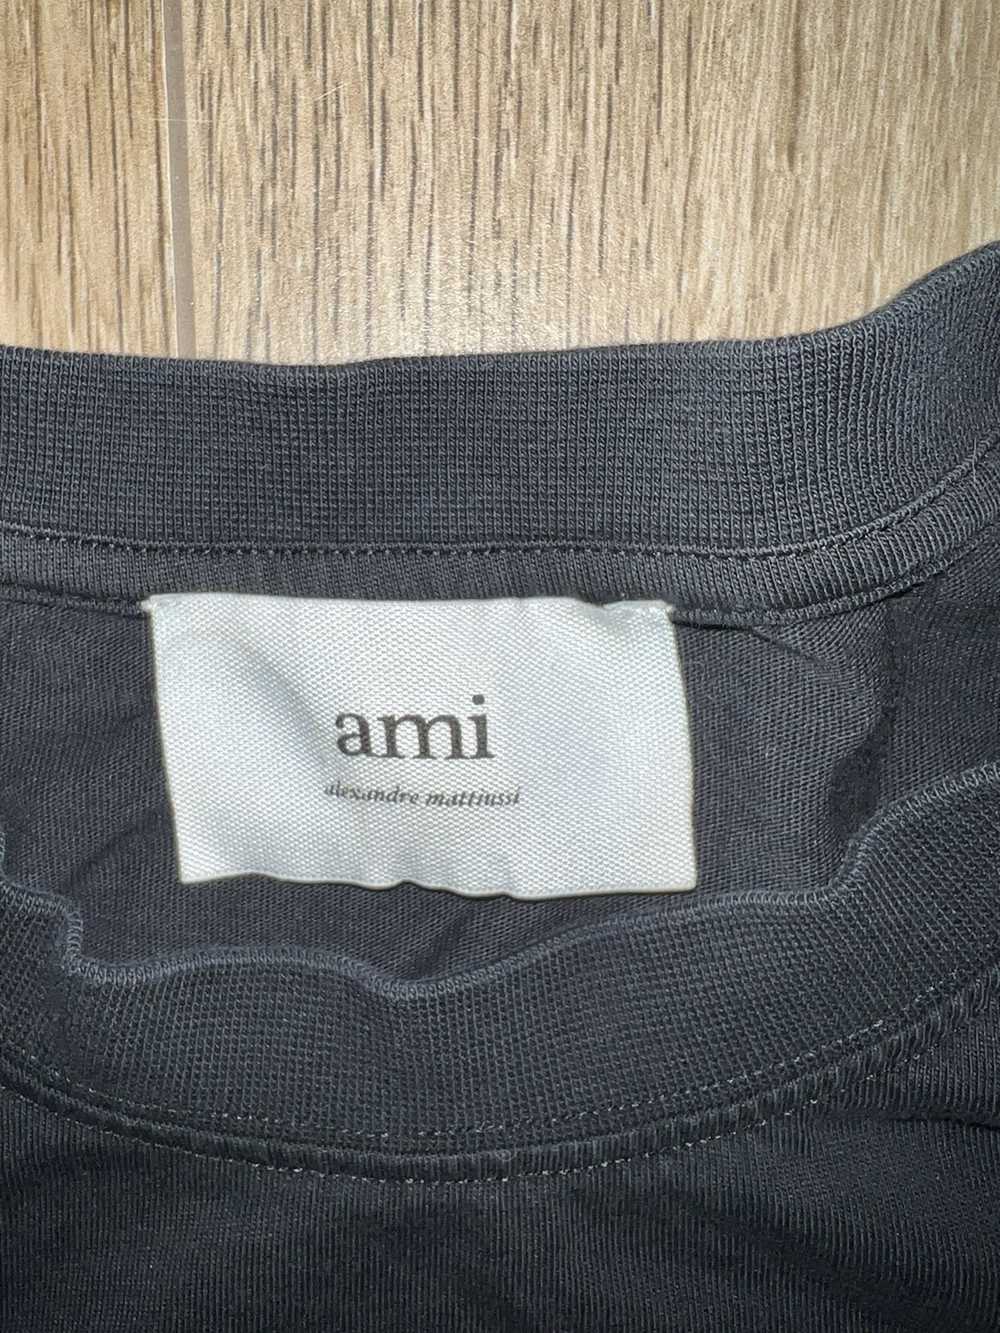 AMI Ami Paris t shirt - image 3